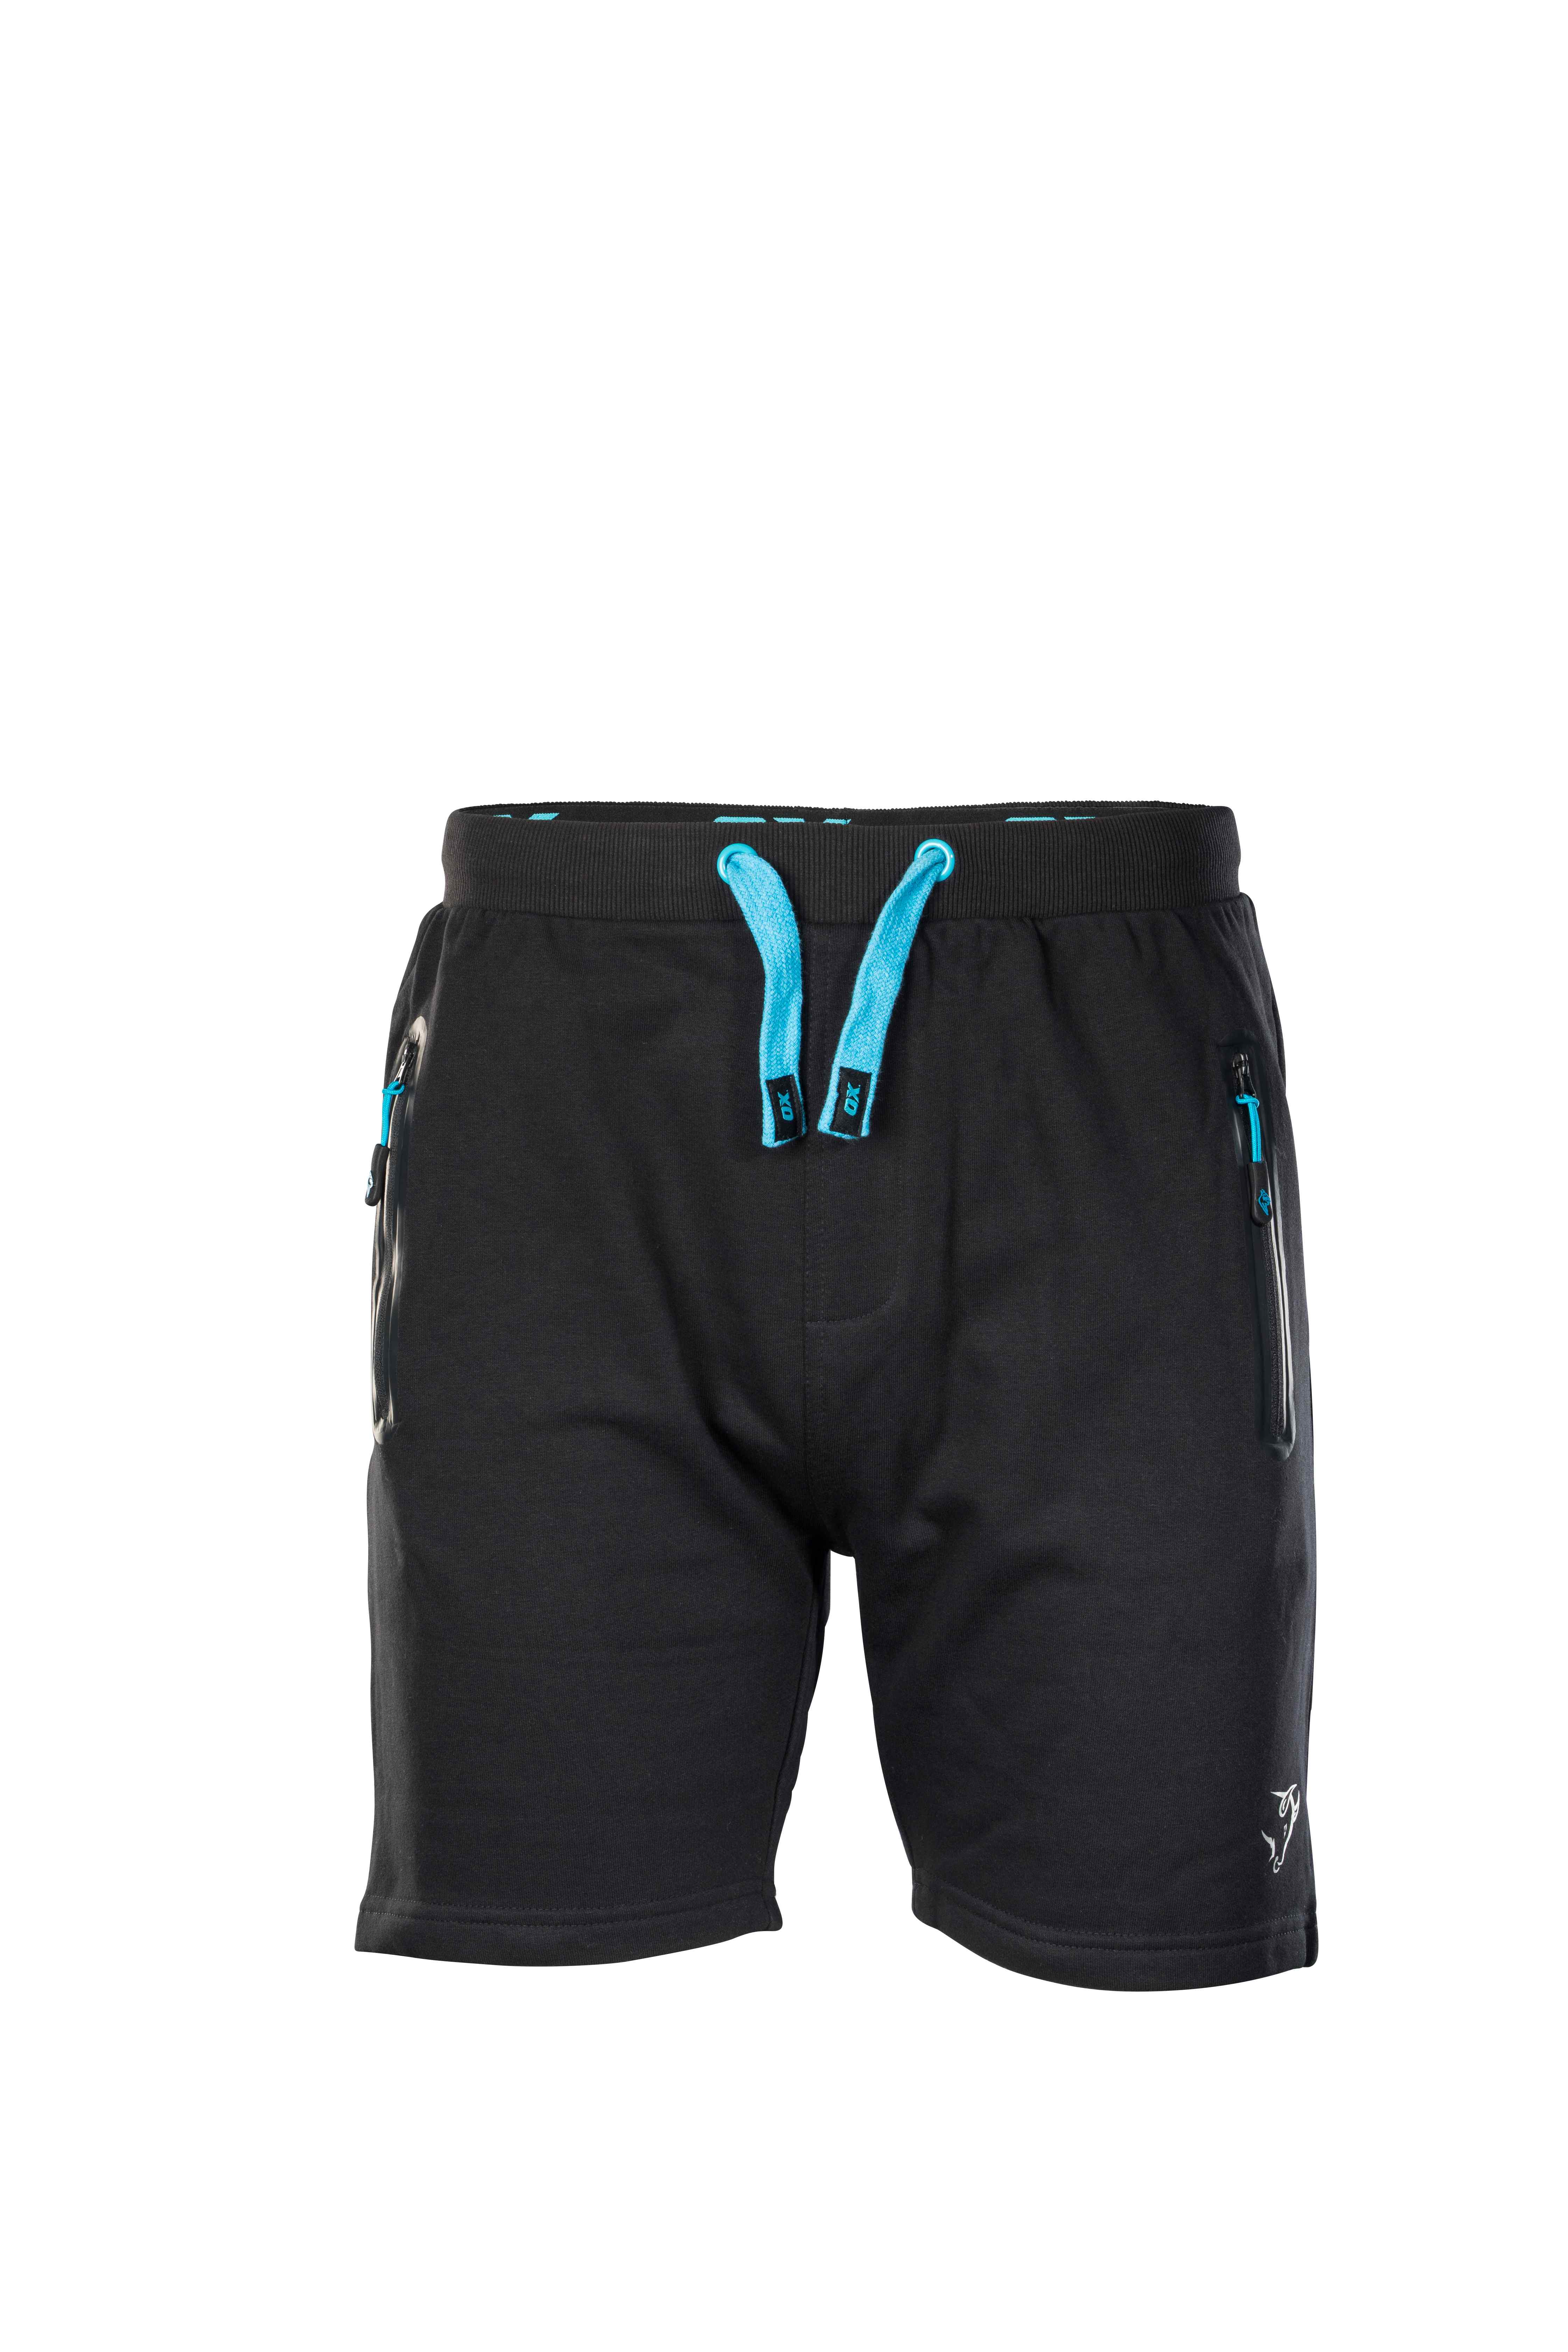 OX Jogger Shorts - Black - 32